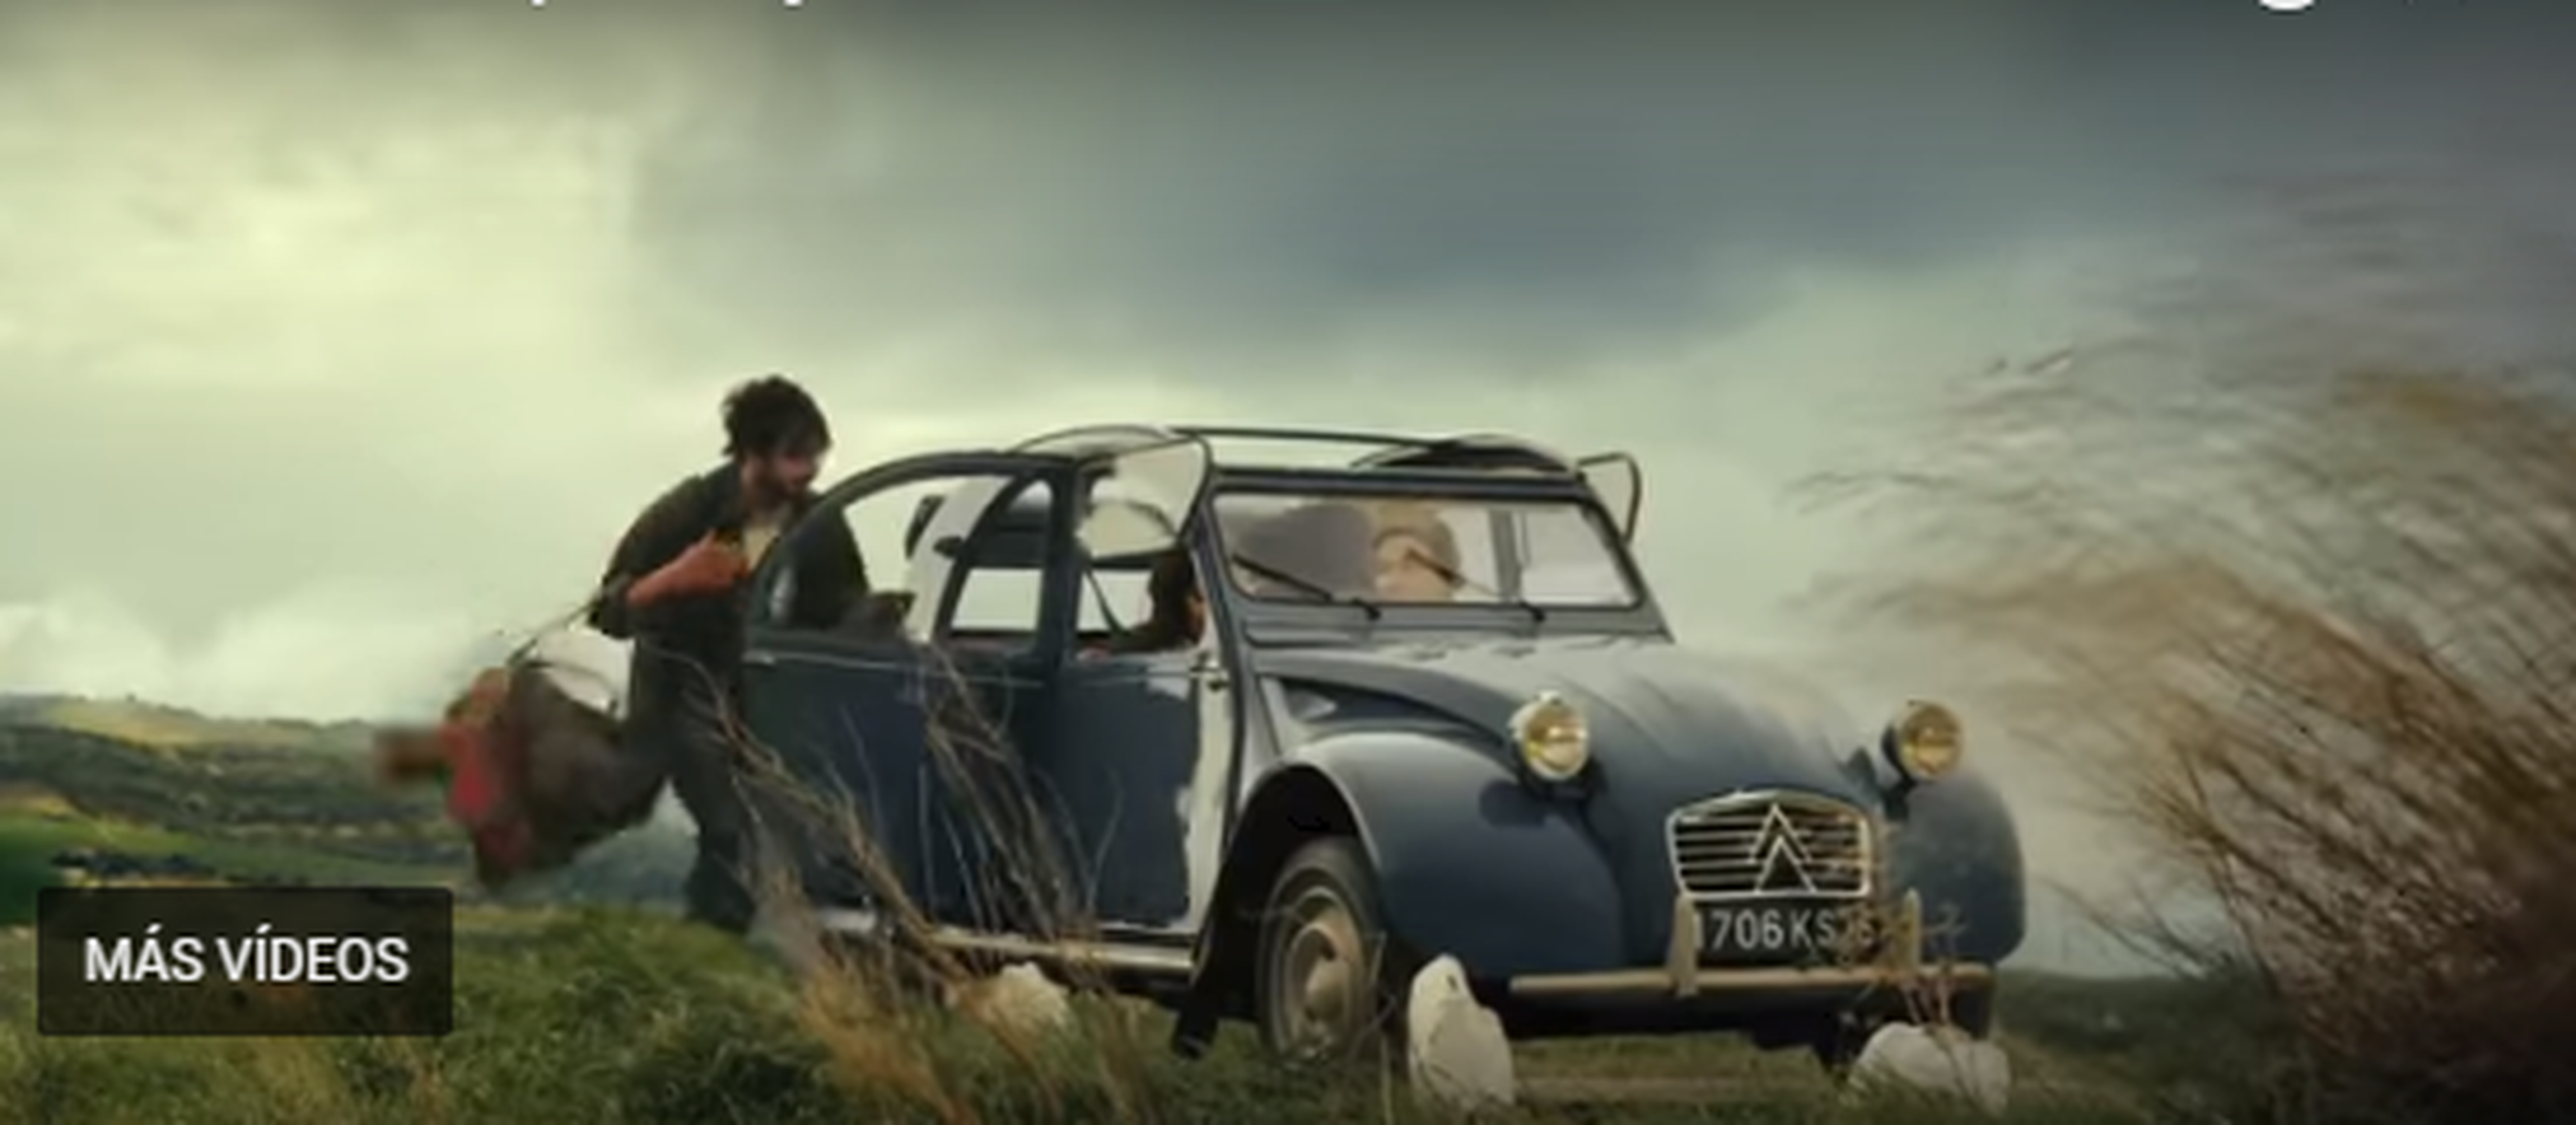 Música del anuncio de Citroën 2018